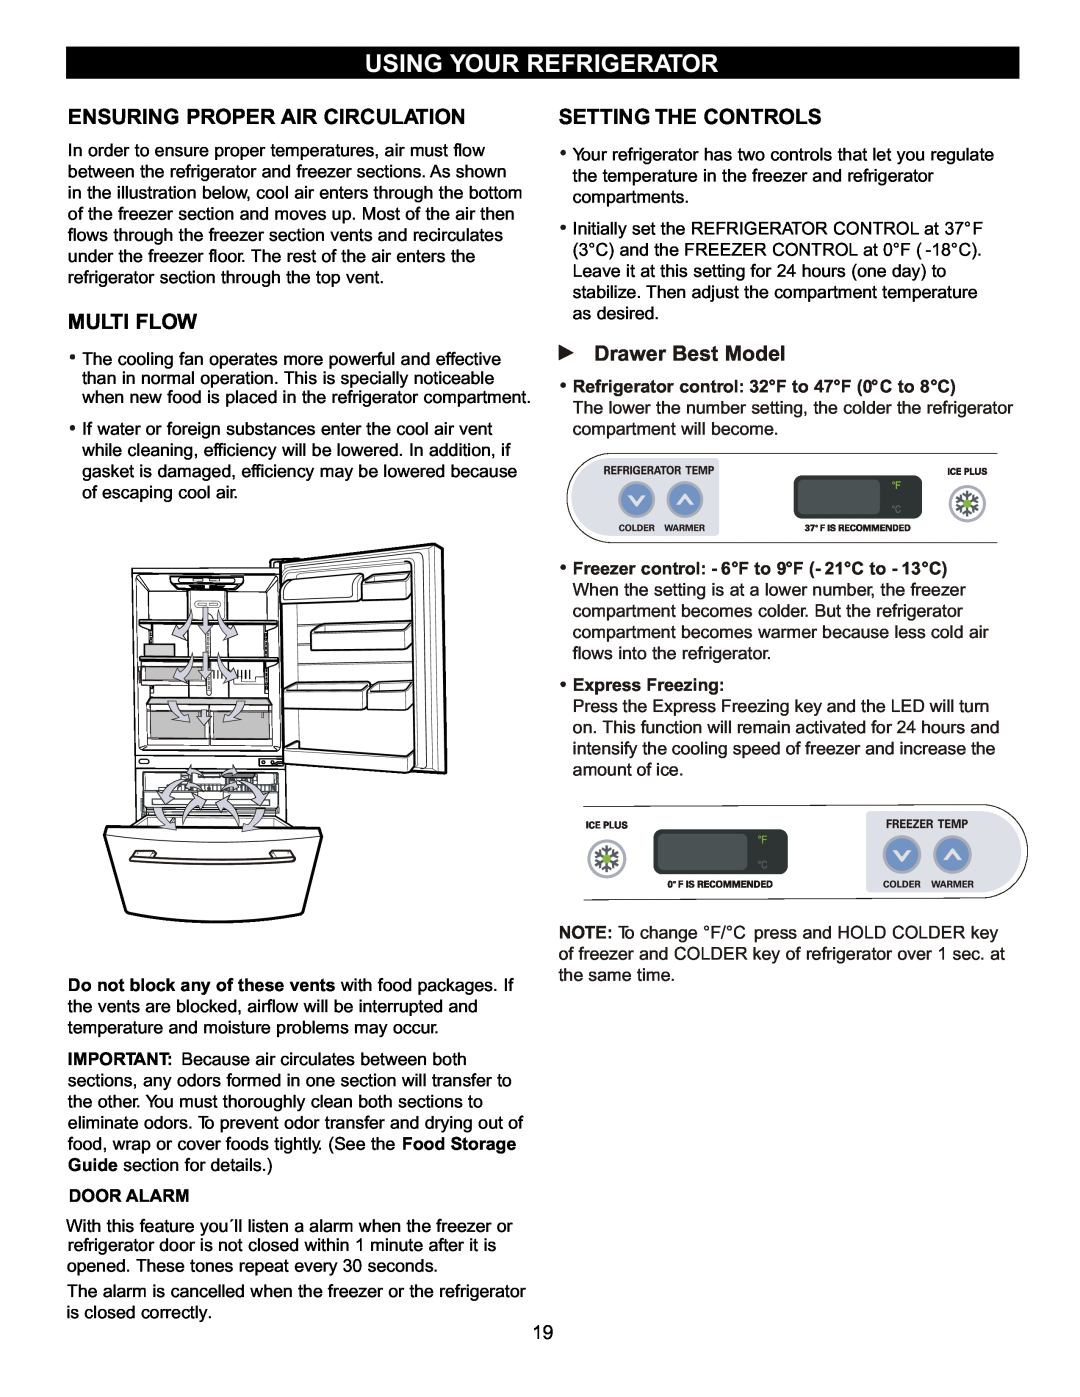 LG Electronics LBN2251 Using Your Refrigerator, Ensuring Proper Air Circulation, Multi Flow, Drawer Best Model, Door Alarm 